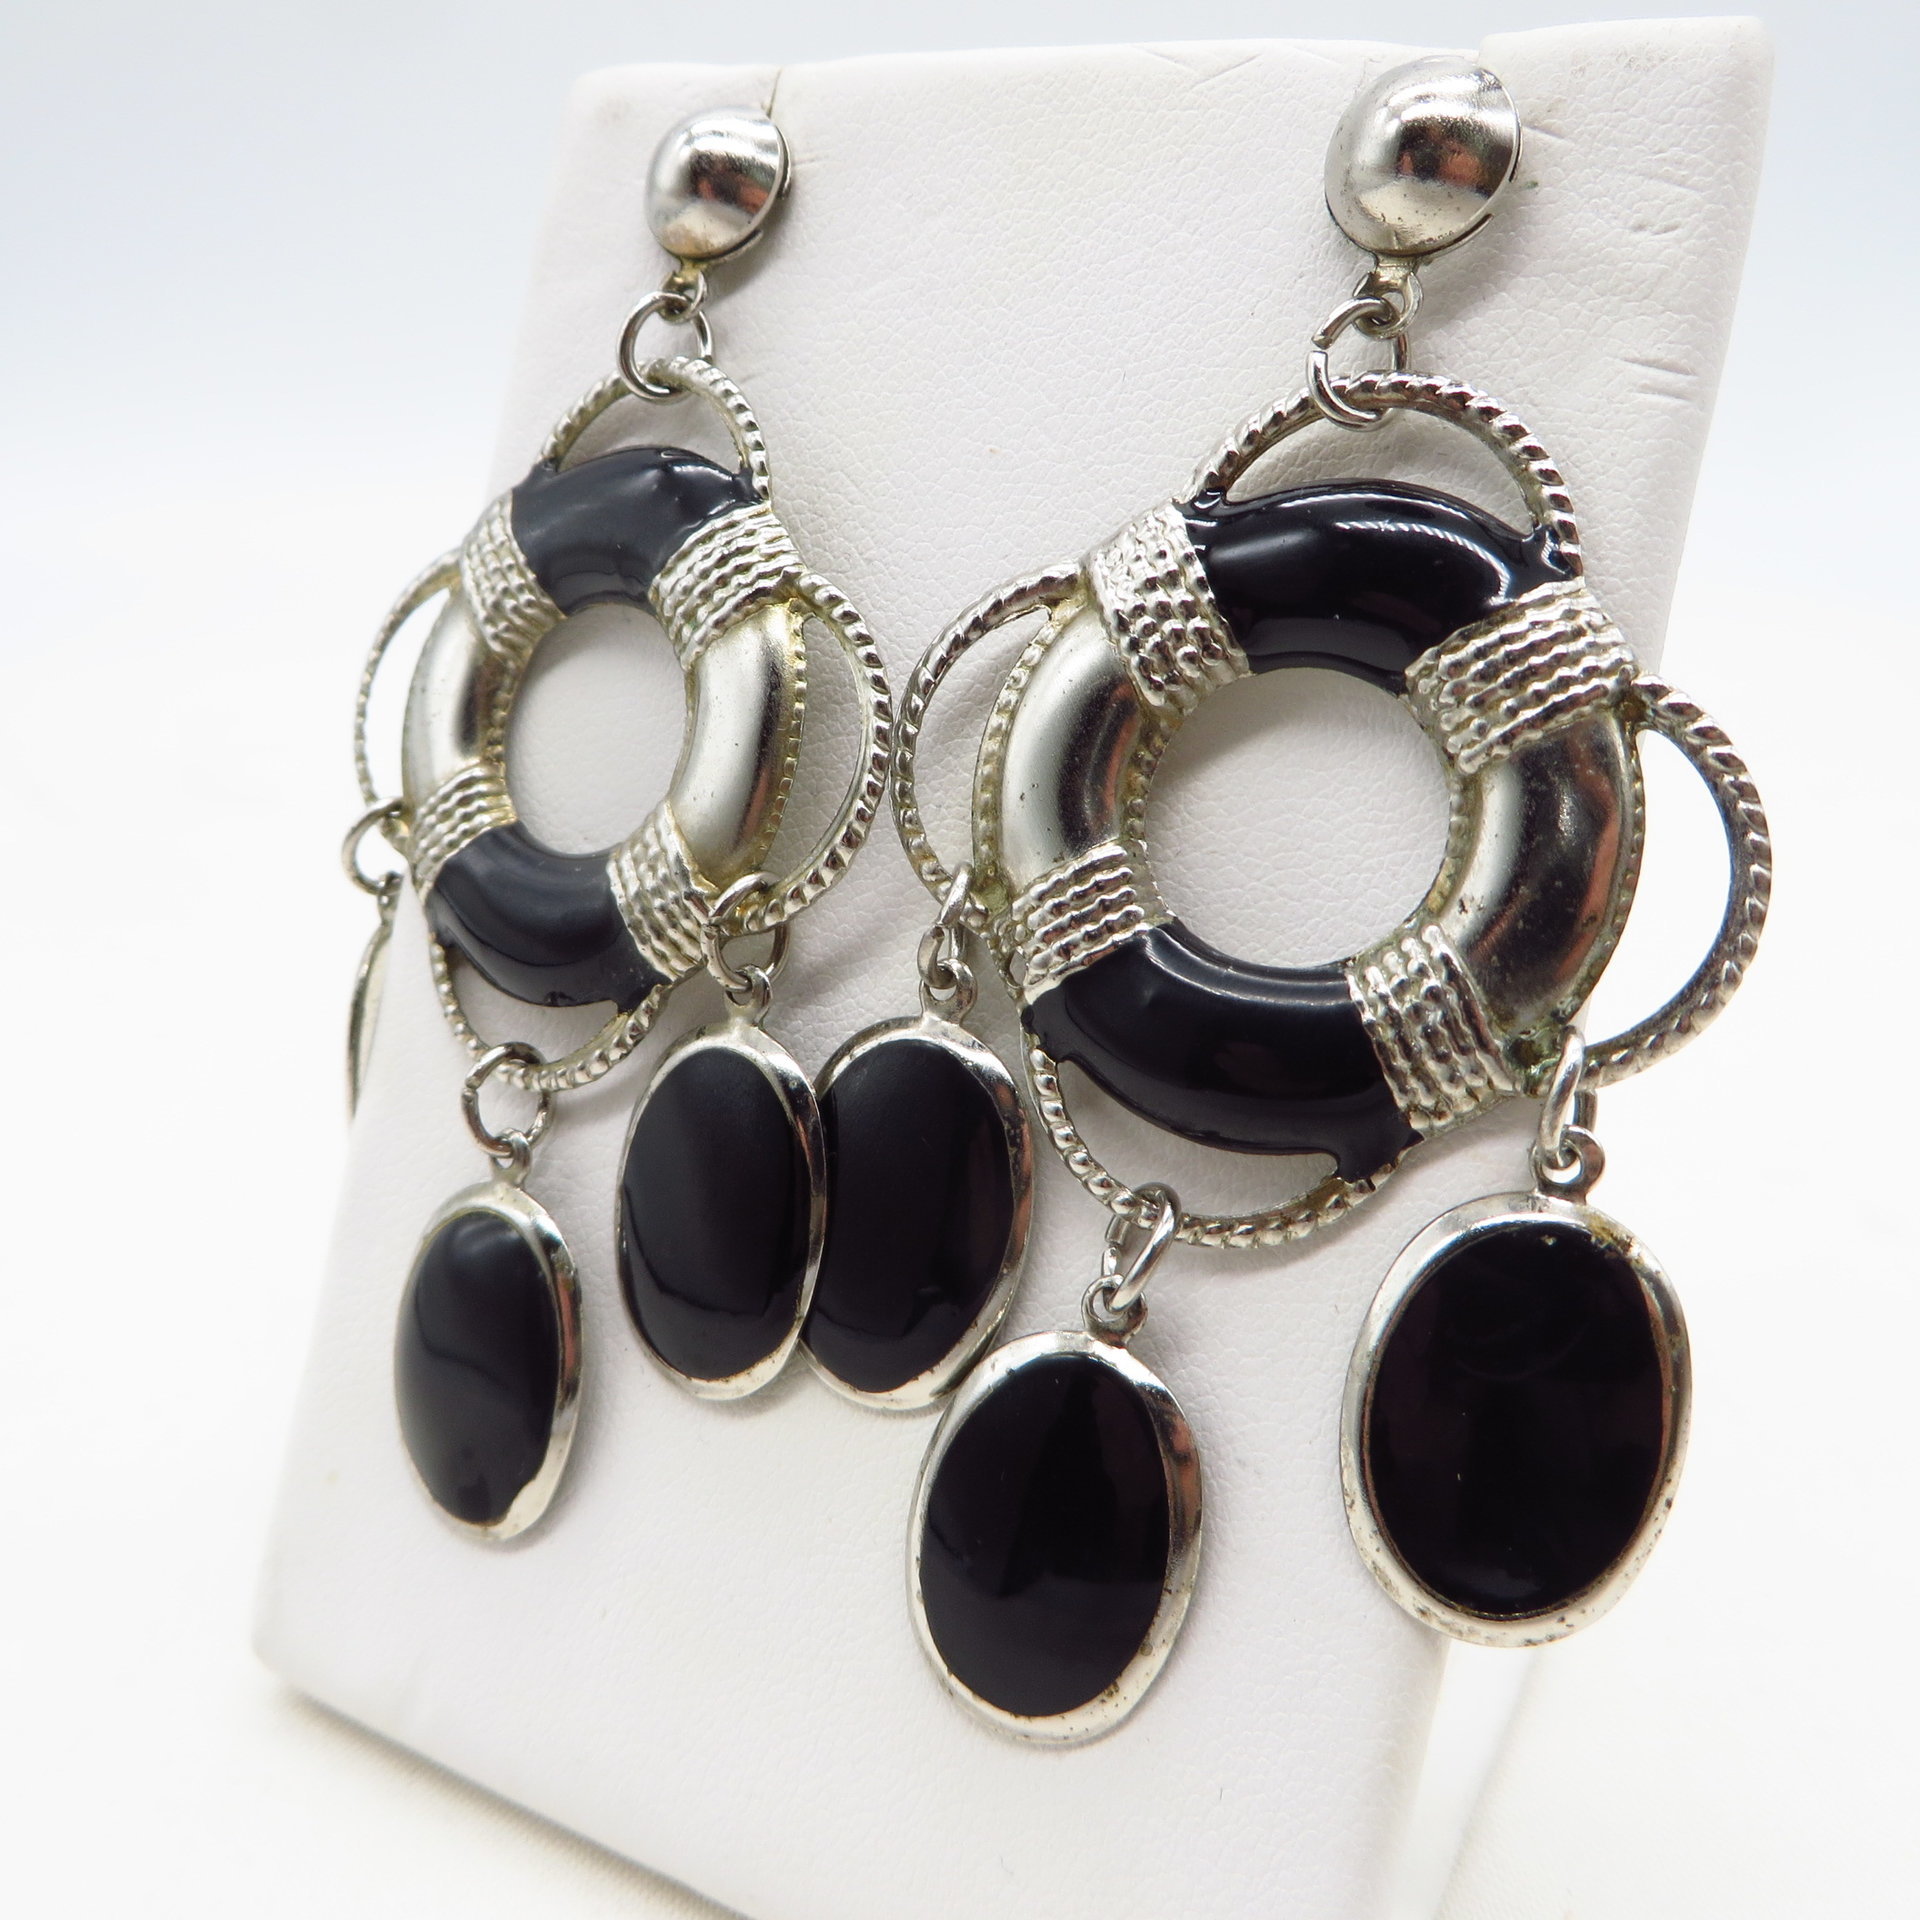 Black and Silver Dangling Bead Earrings, Vintage Nautical Boho Pierced Stud Earrings